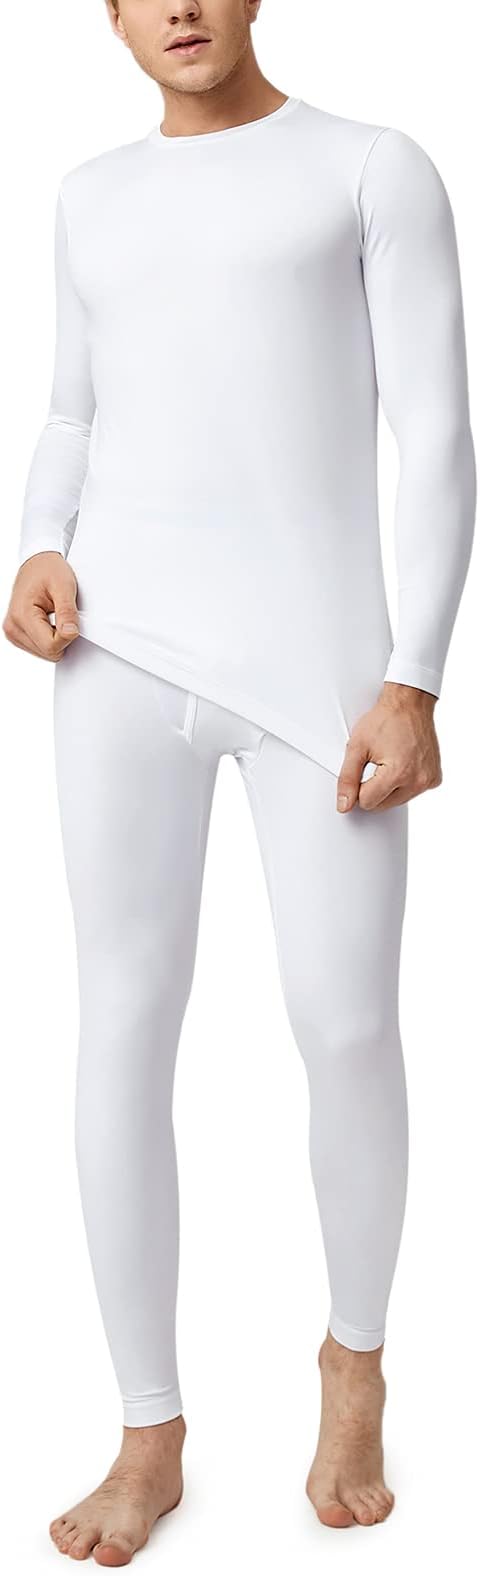 LAPASA Men’s Thermal Underwear Set Soft Fleece Lined Long Johns